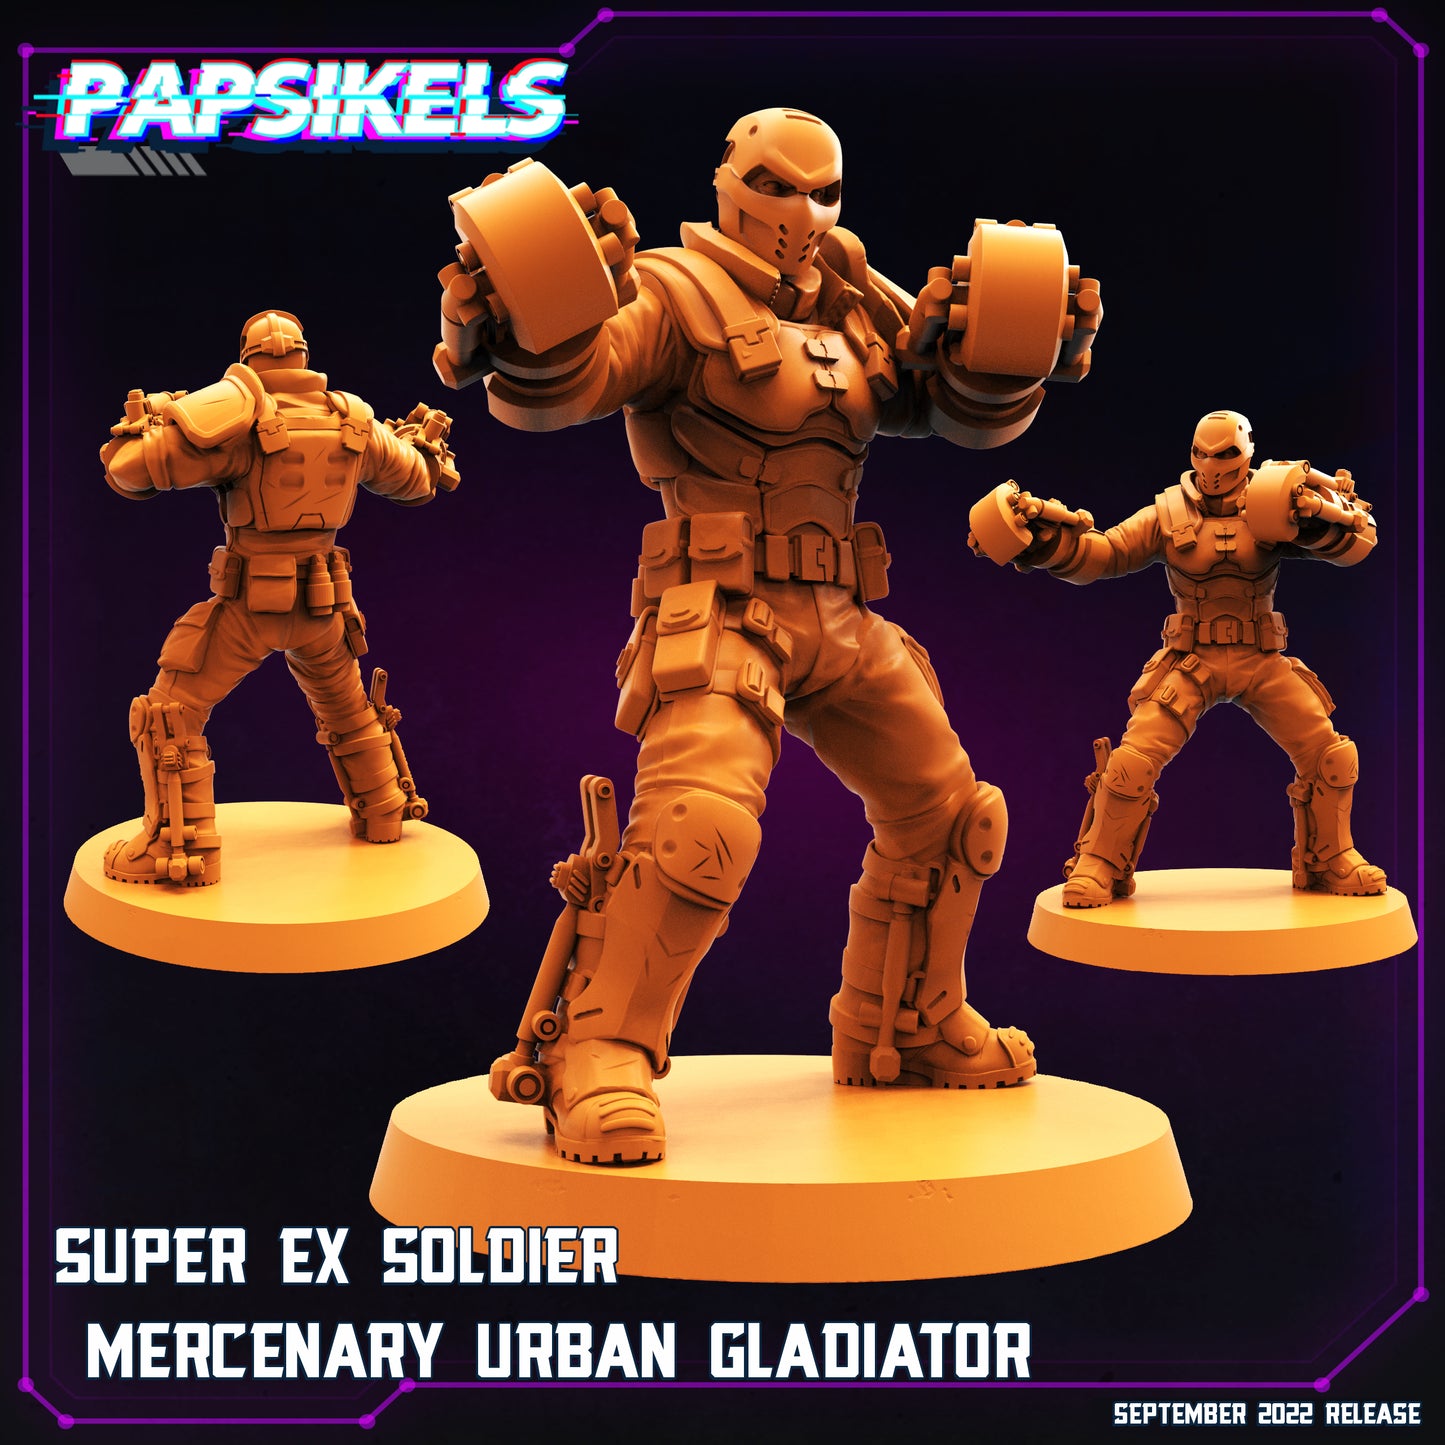 Super Ex Soldier Mercenary Urban Gladiator